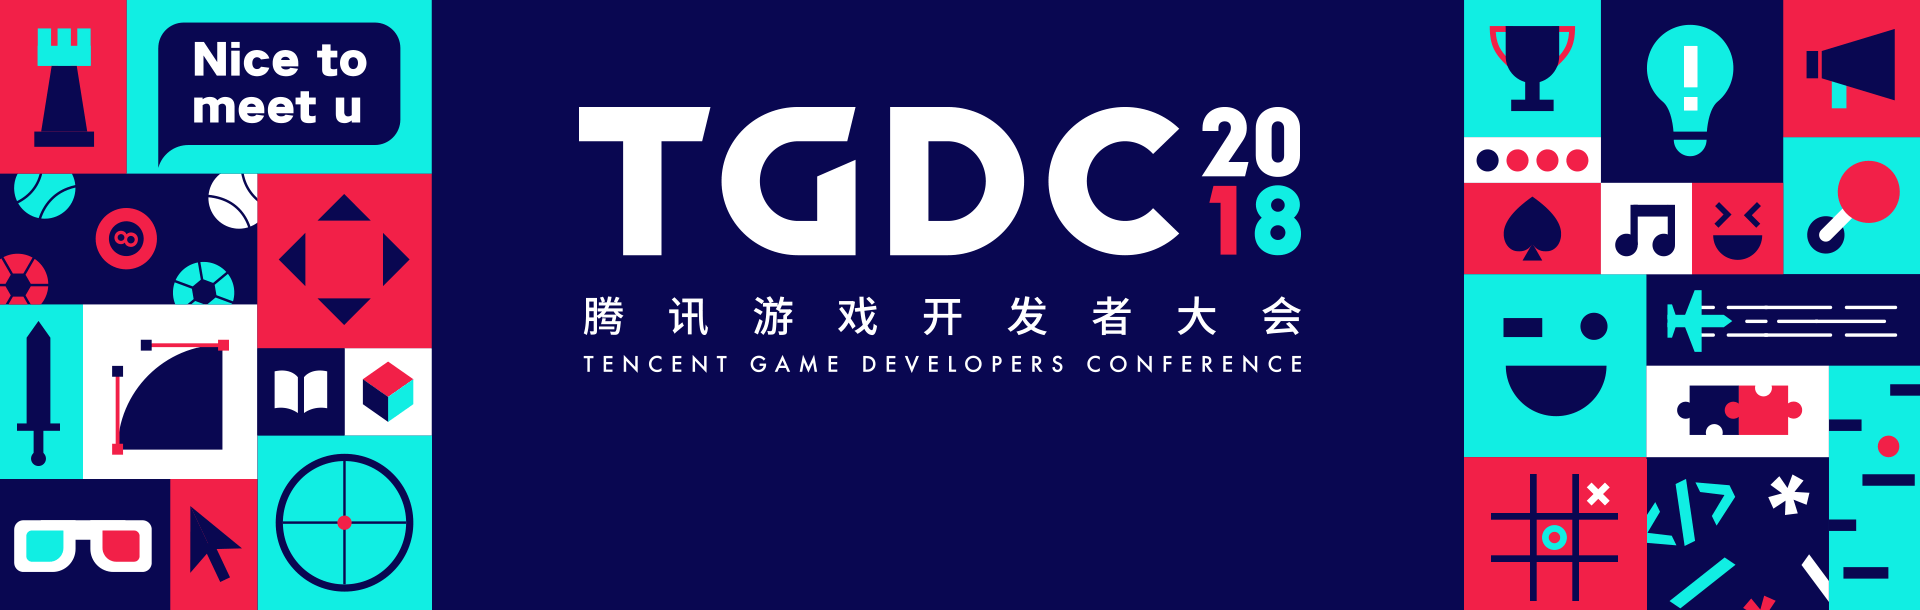 TGDC 2018 头图